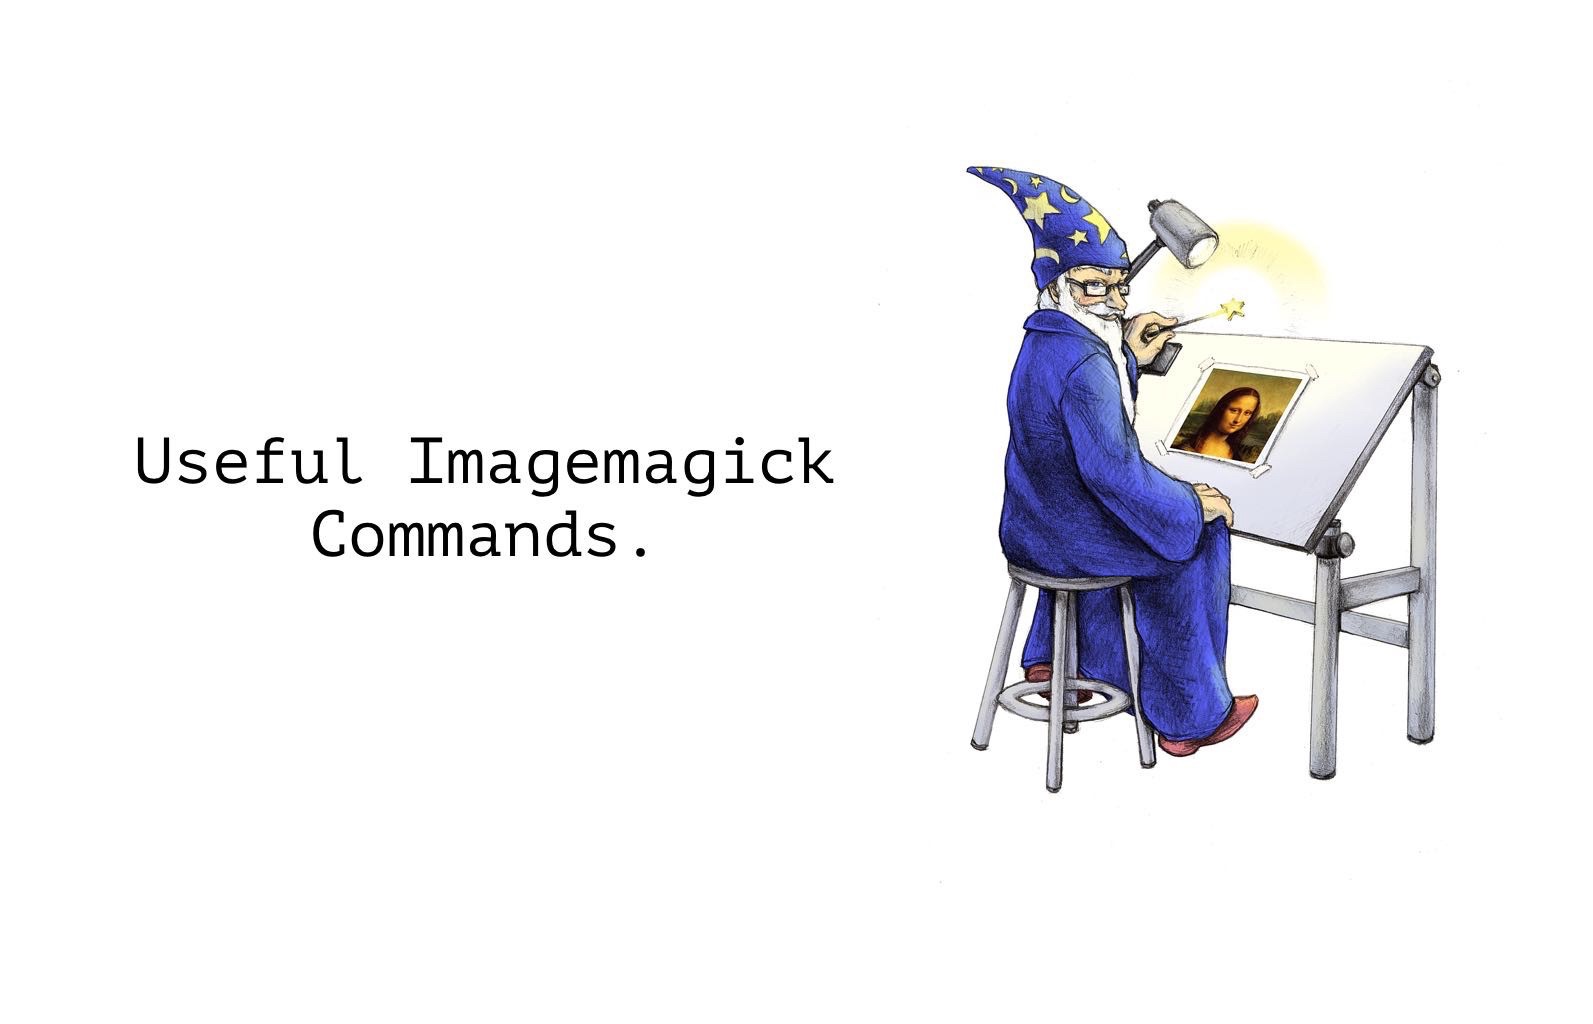 Useful Imagemagick Commands